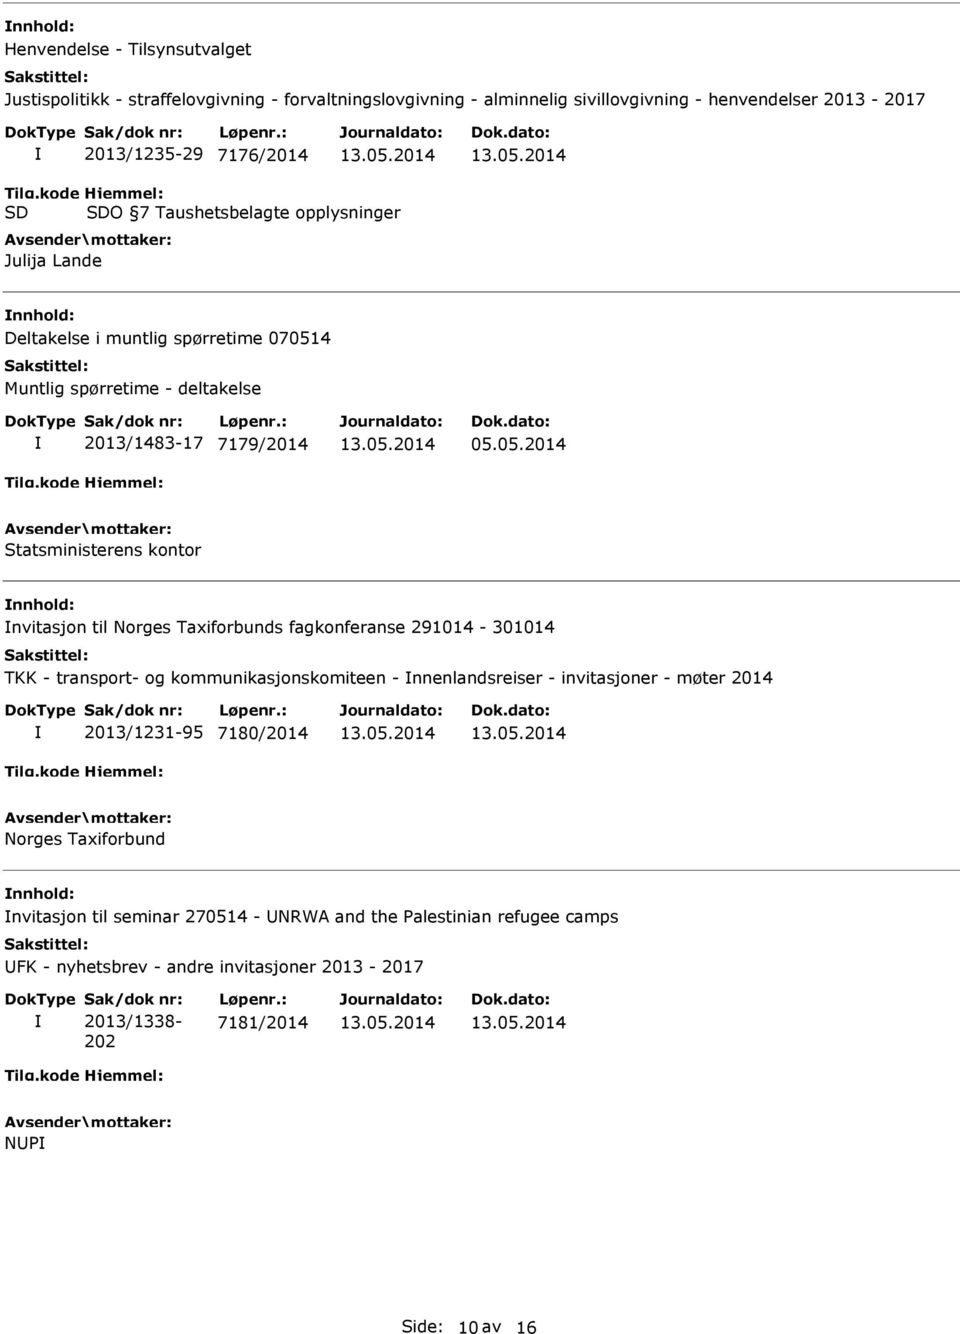 4 Muntlig spørretime - deltakelse 2013/1483-17 7179/2014 05.